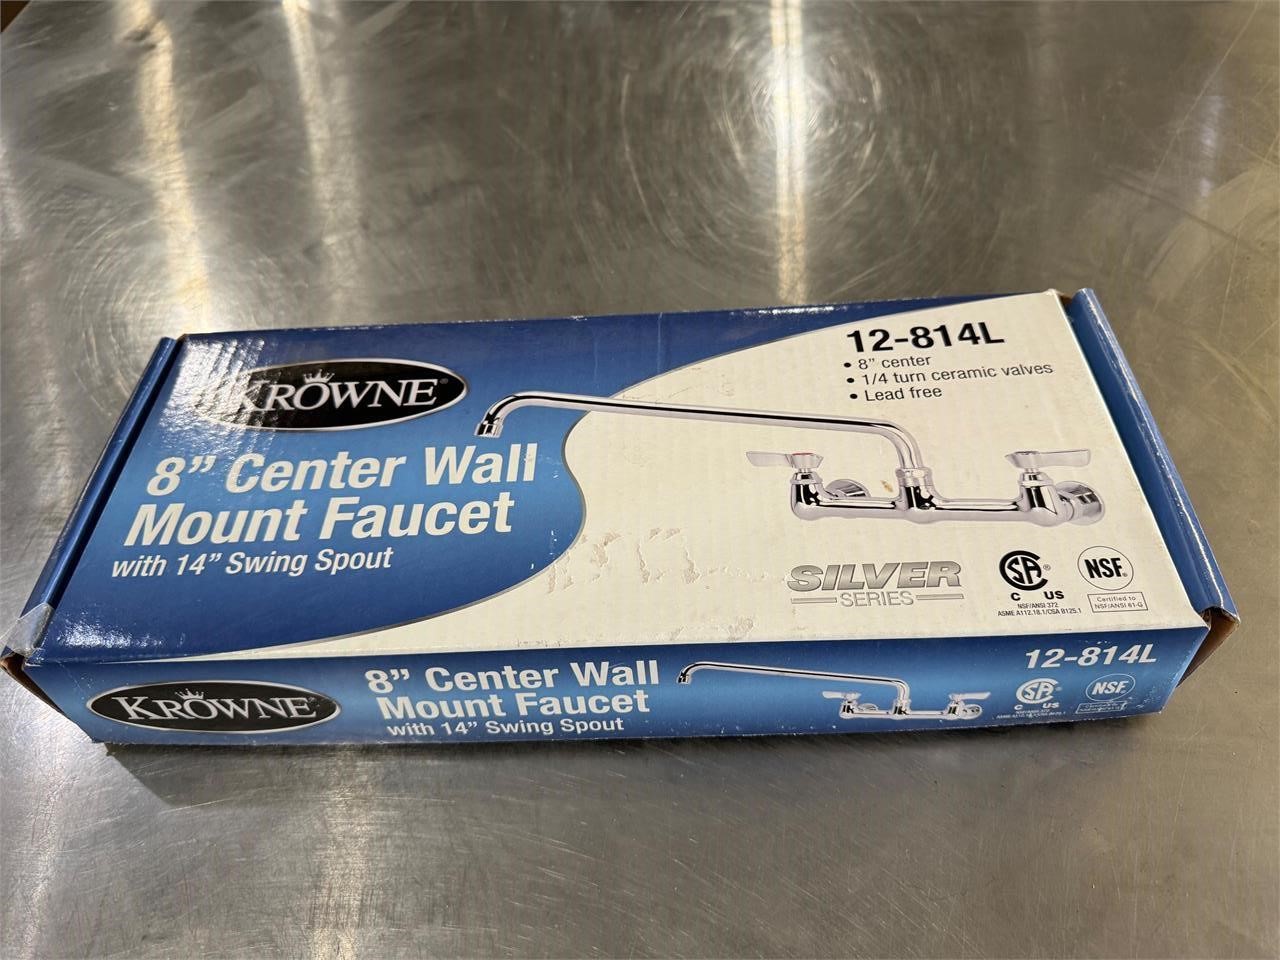 New Krowne 8” Center Wall Mount Faucet